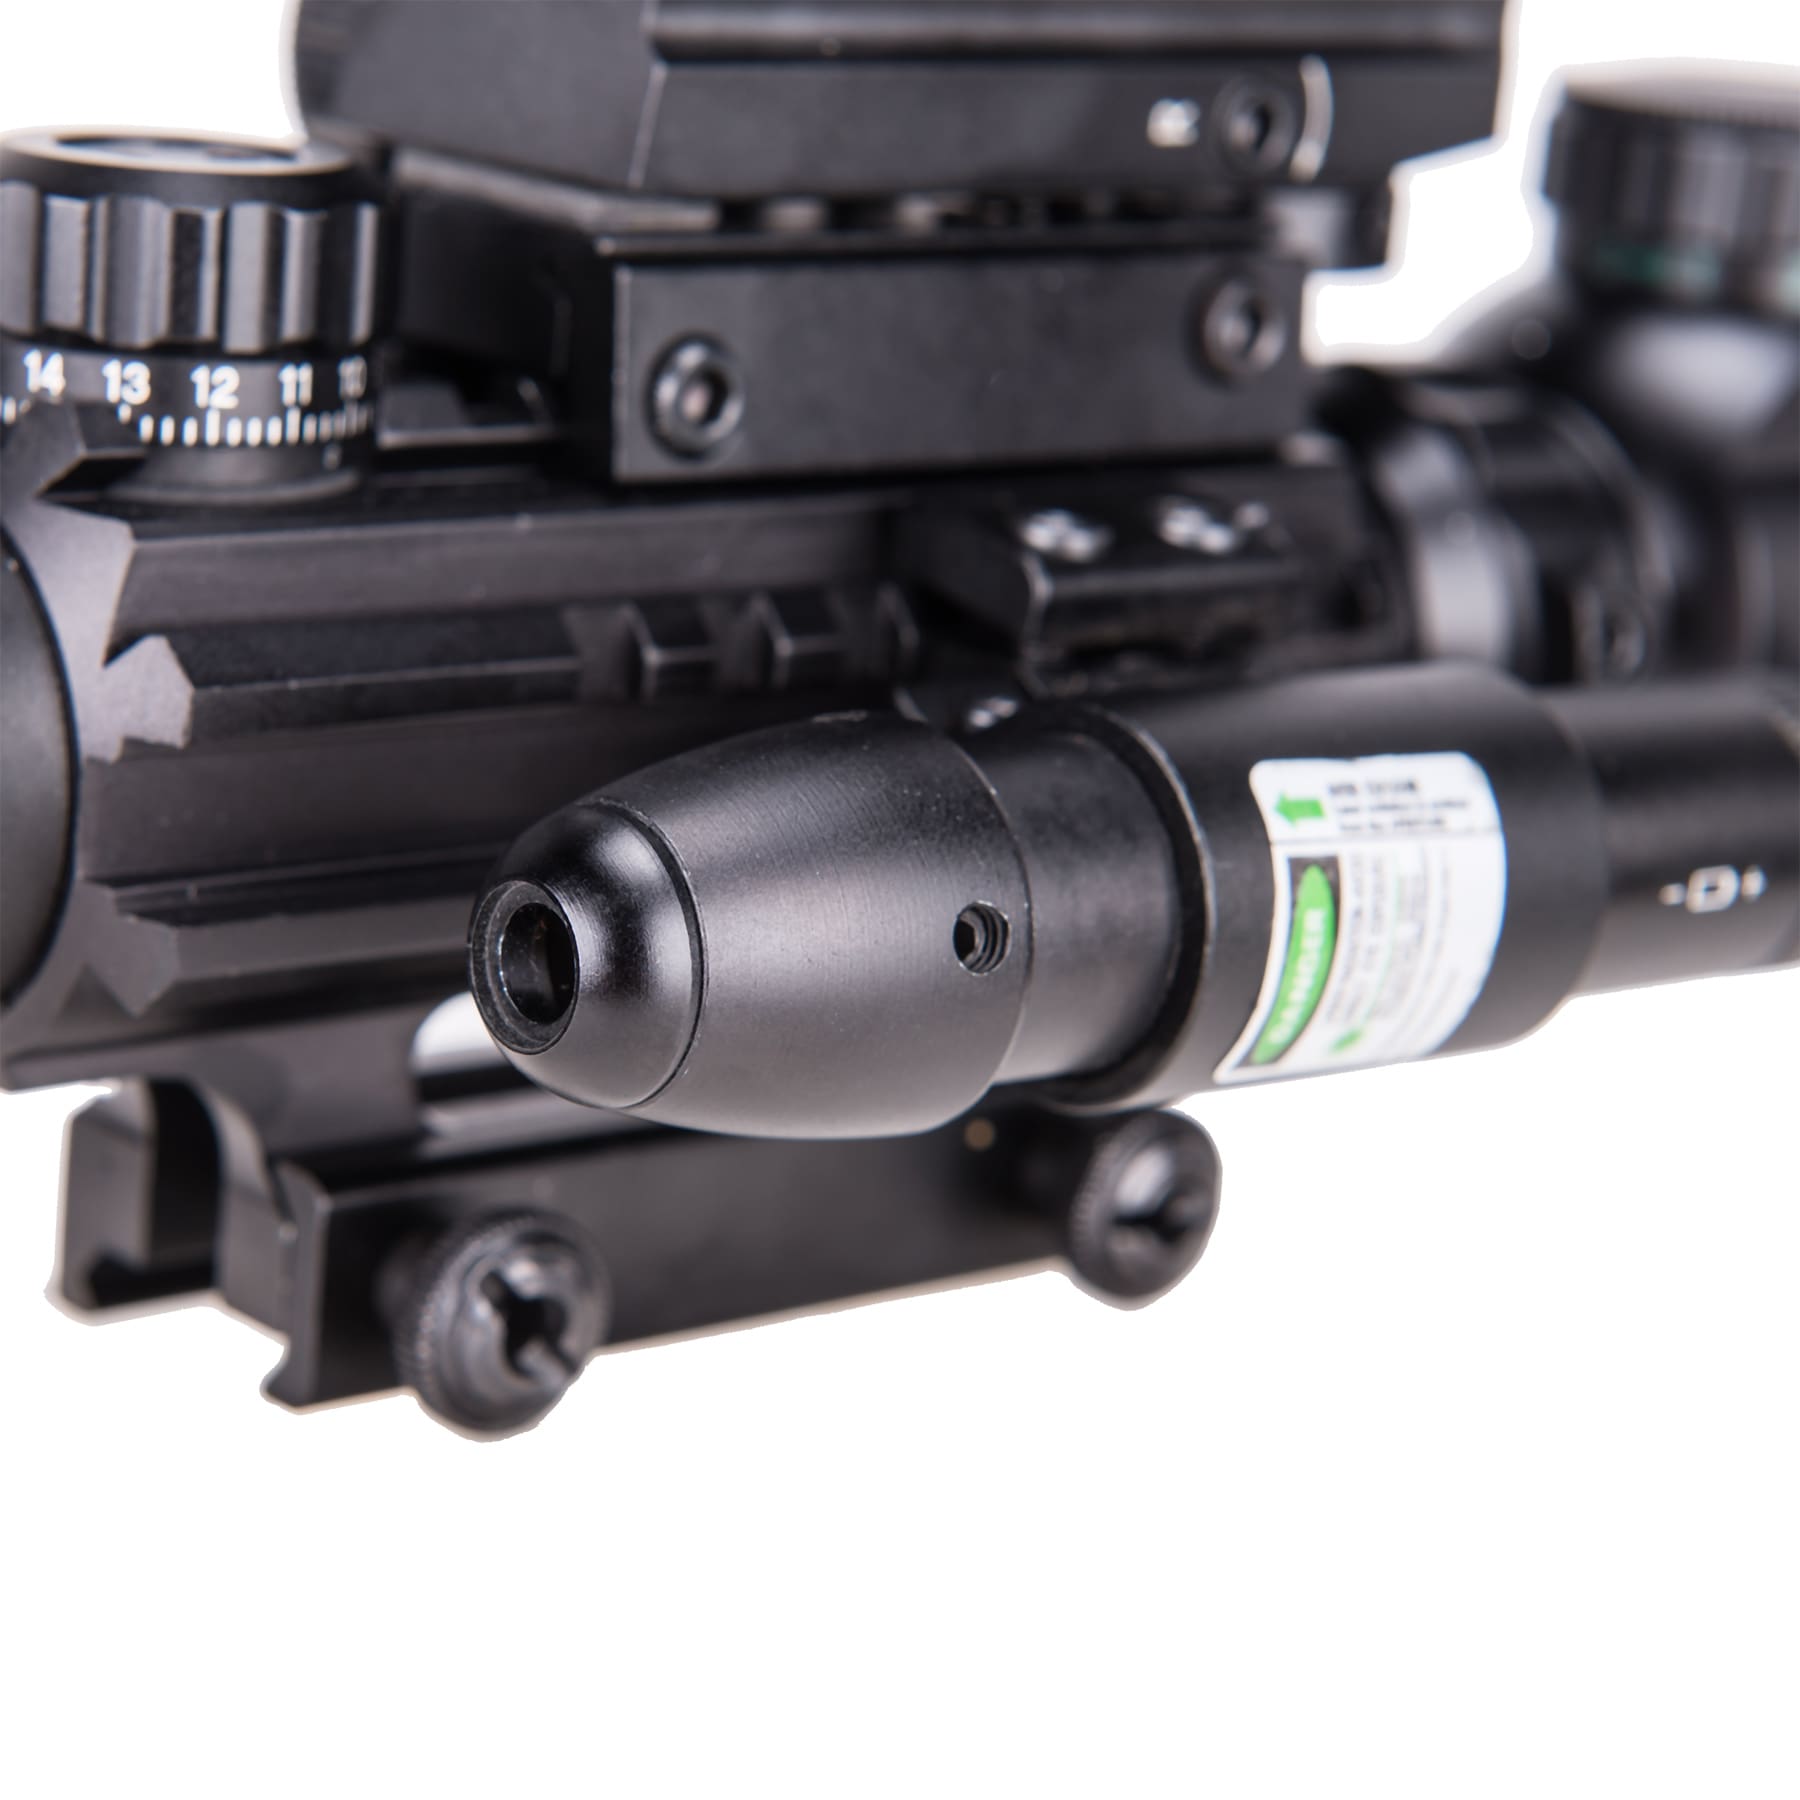 3 in 1 Scope Combo, 4-16x50EG Illuminated Rangefinder Rifle Scope,Green Laser